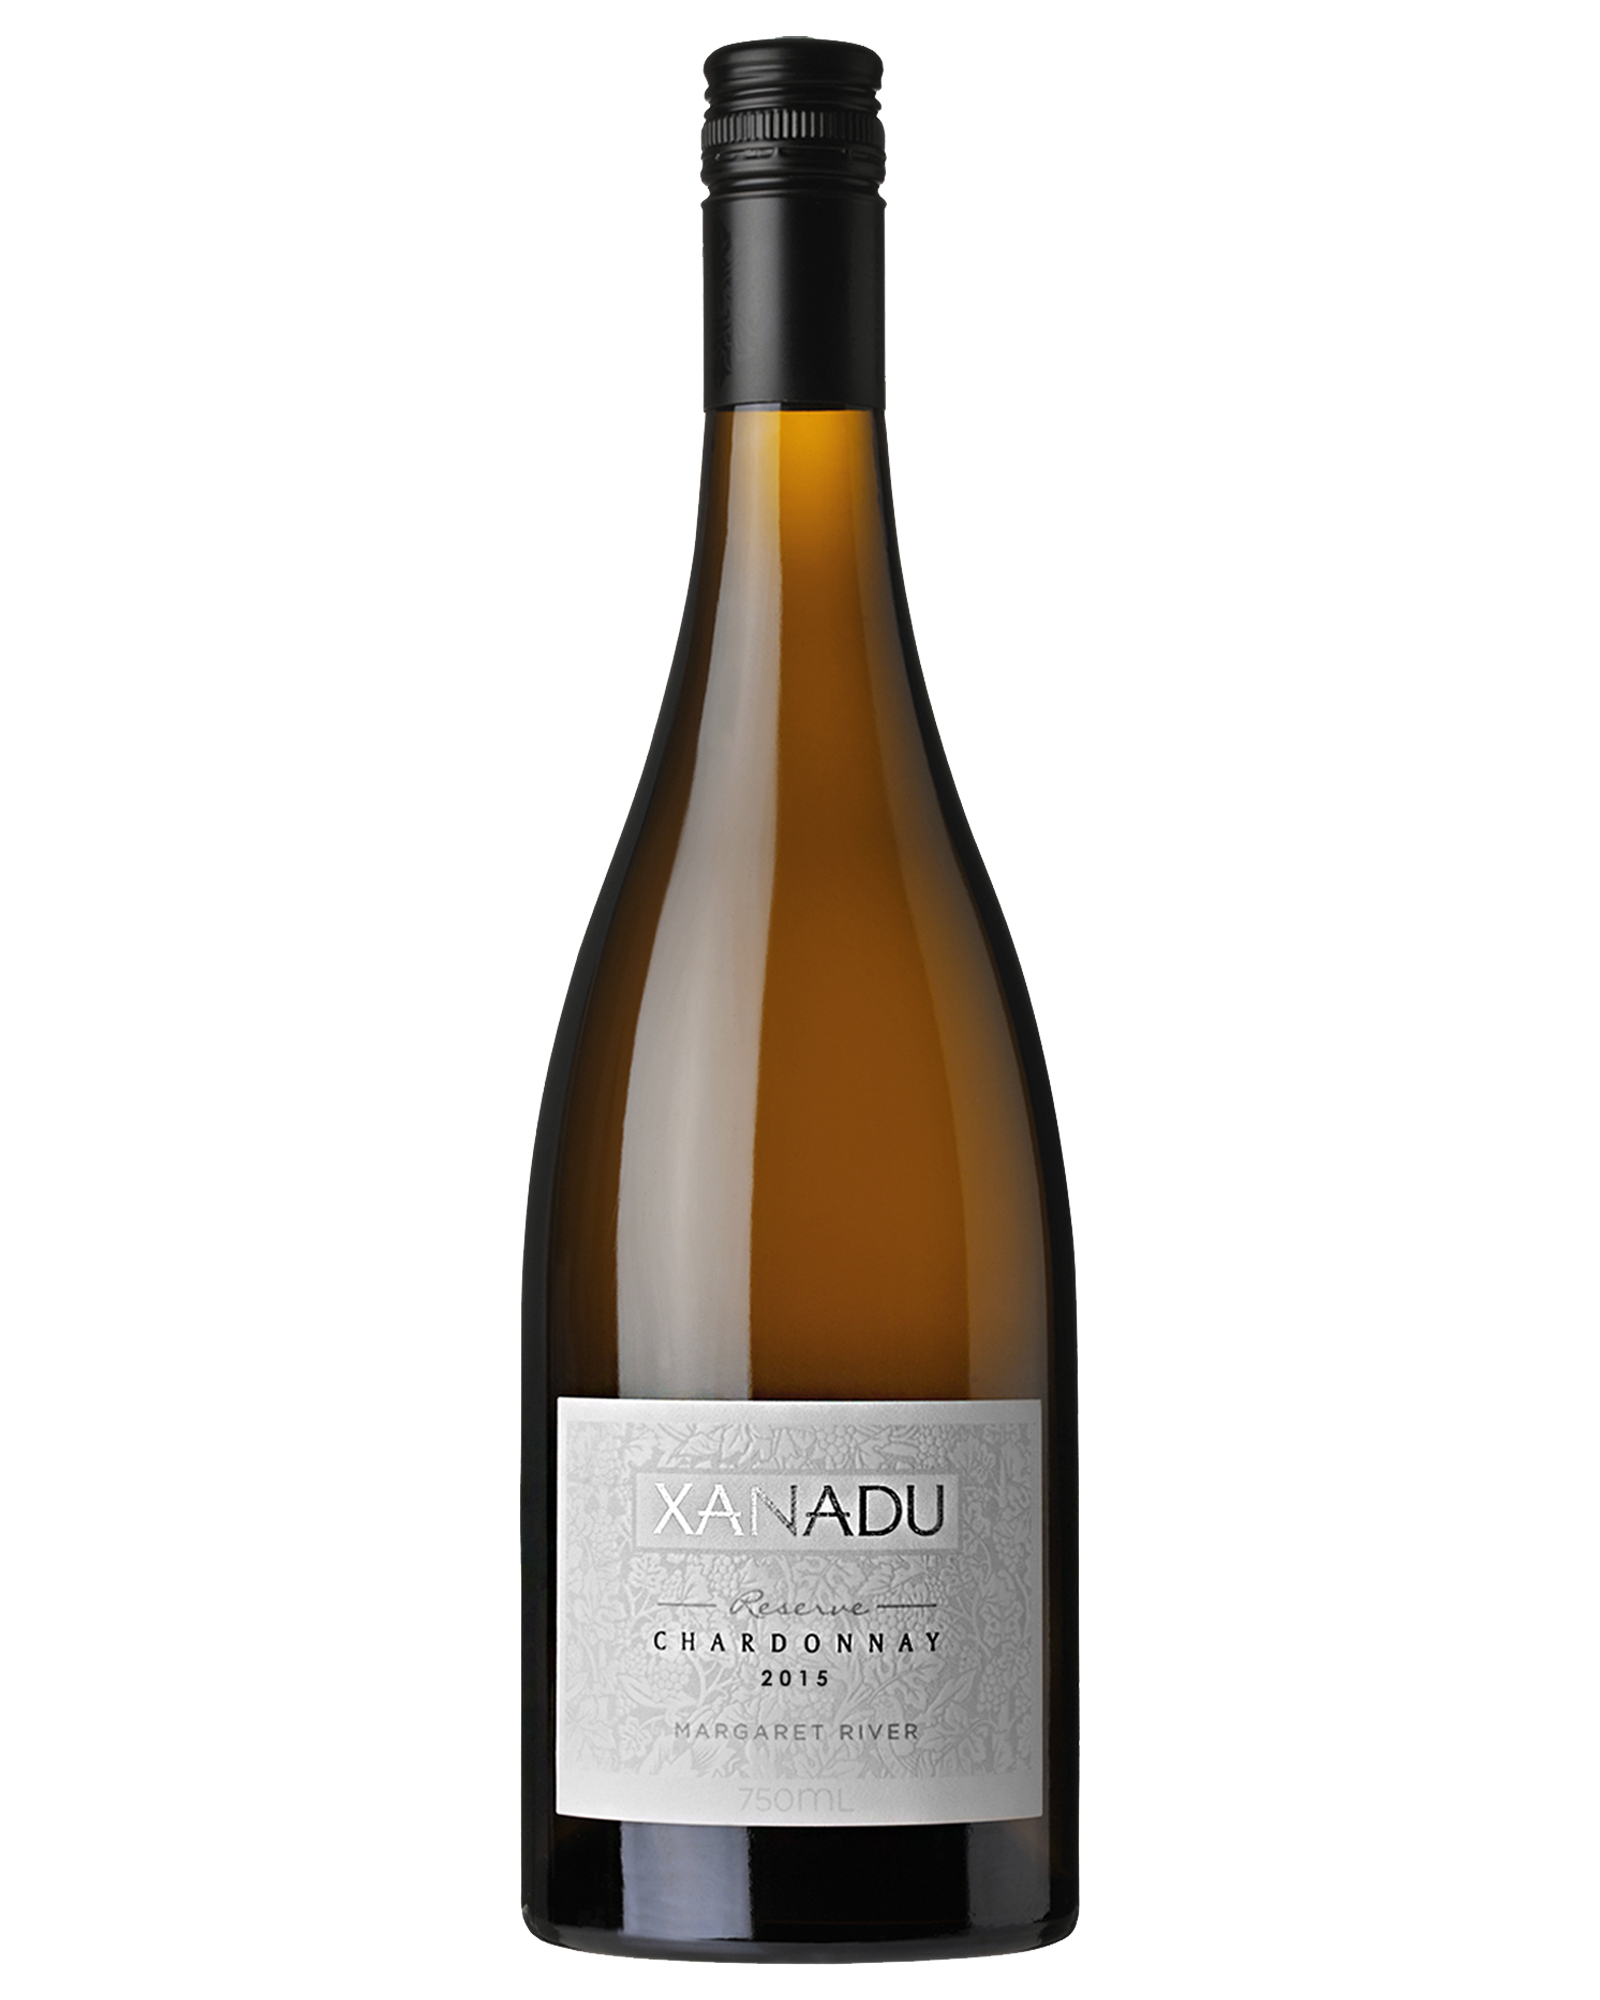 Xanadu Reserve Chardonnay 2015